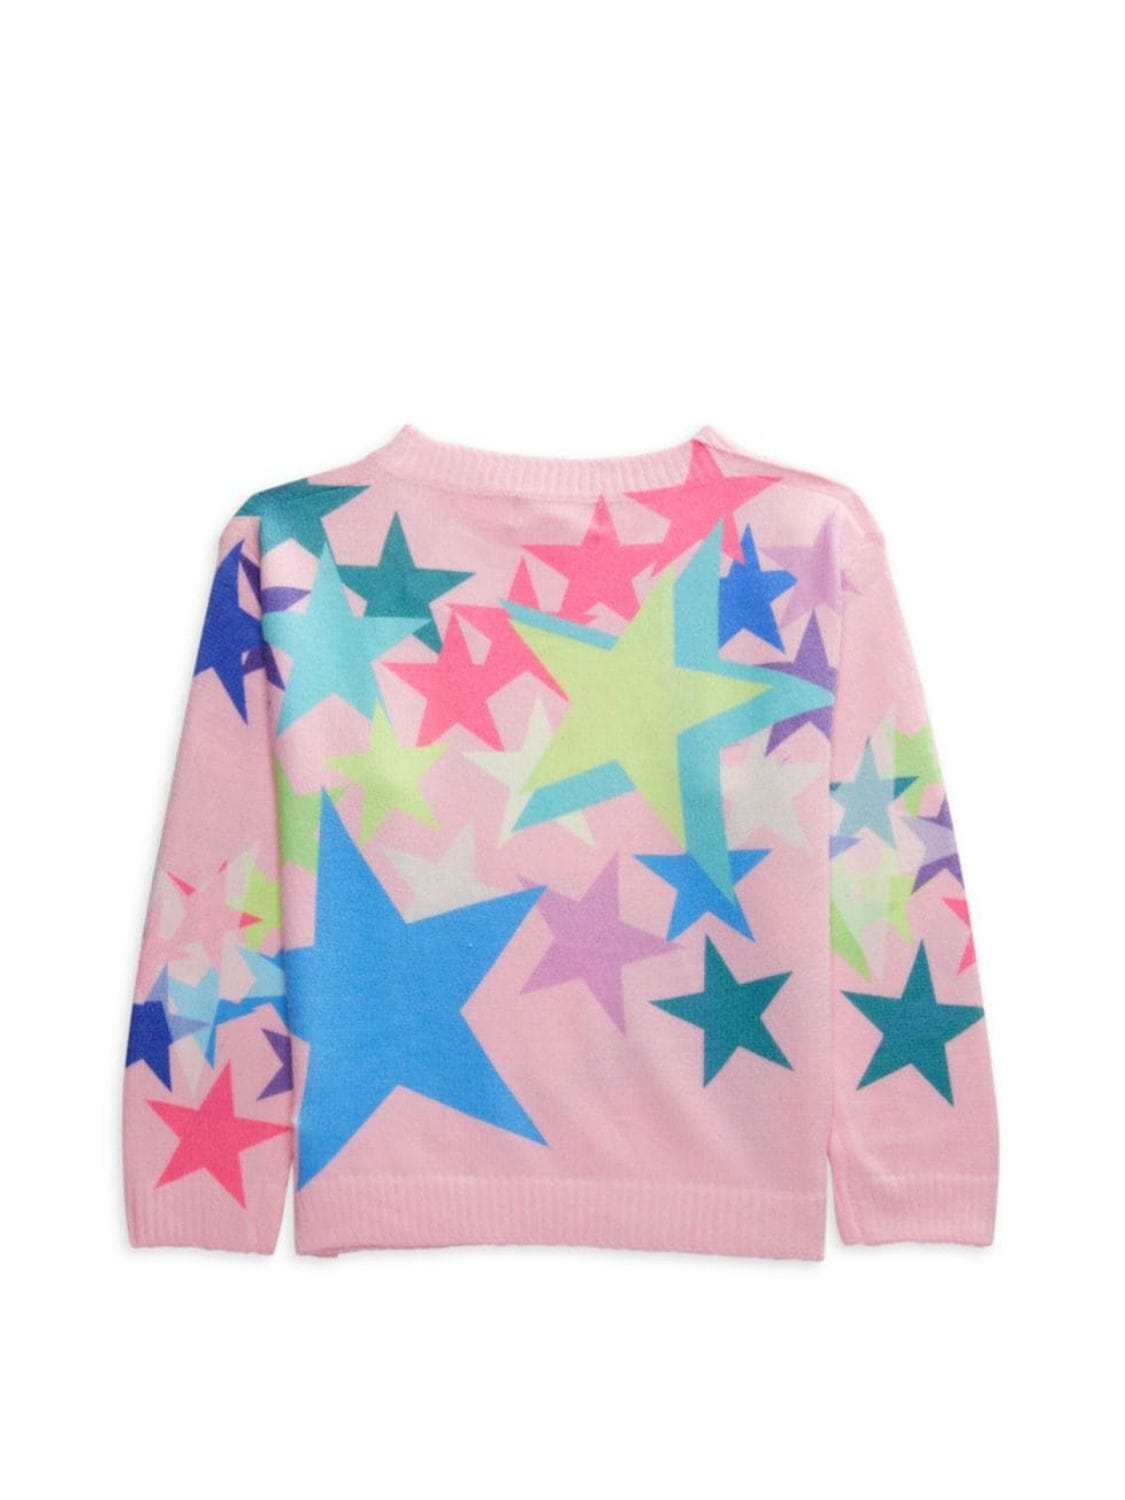 Fashionably, BBK! Girls Embellished Star Sweater